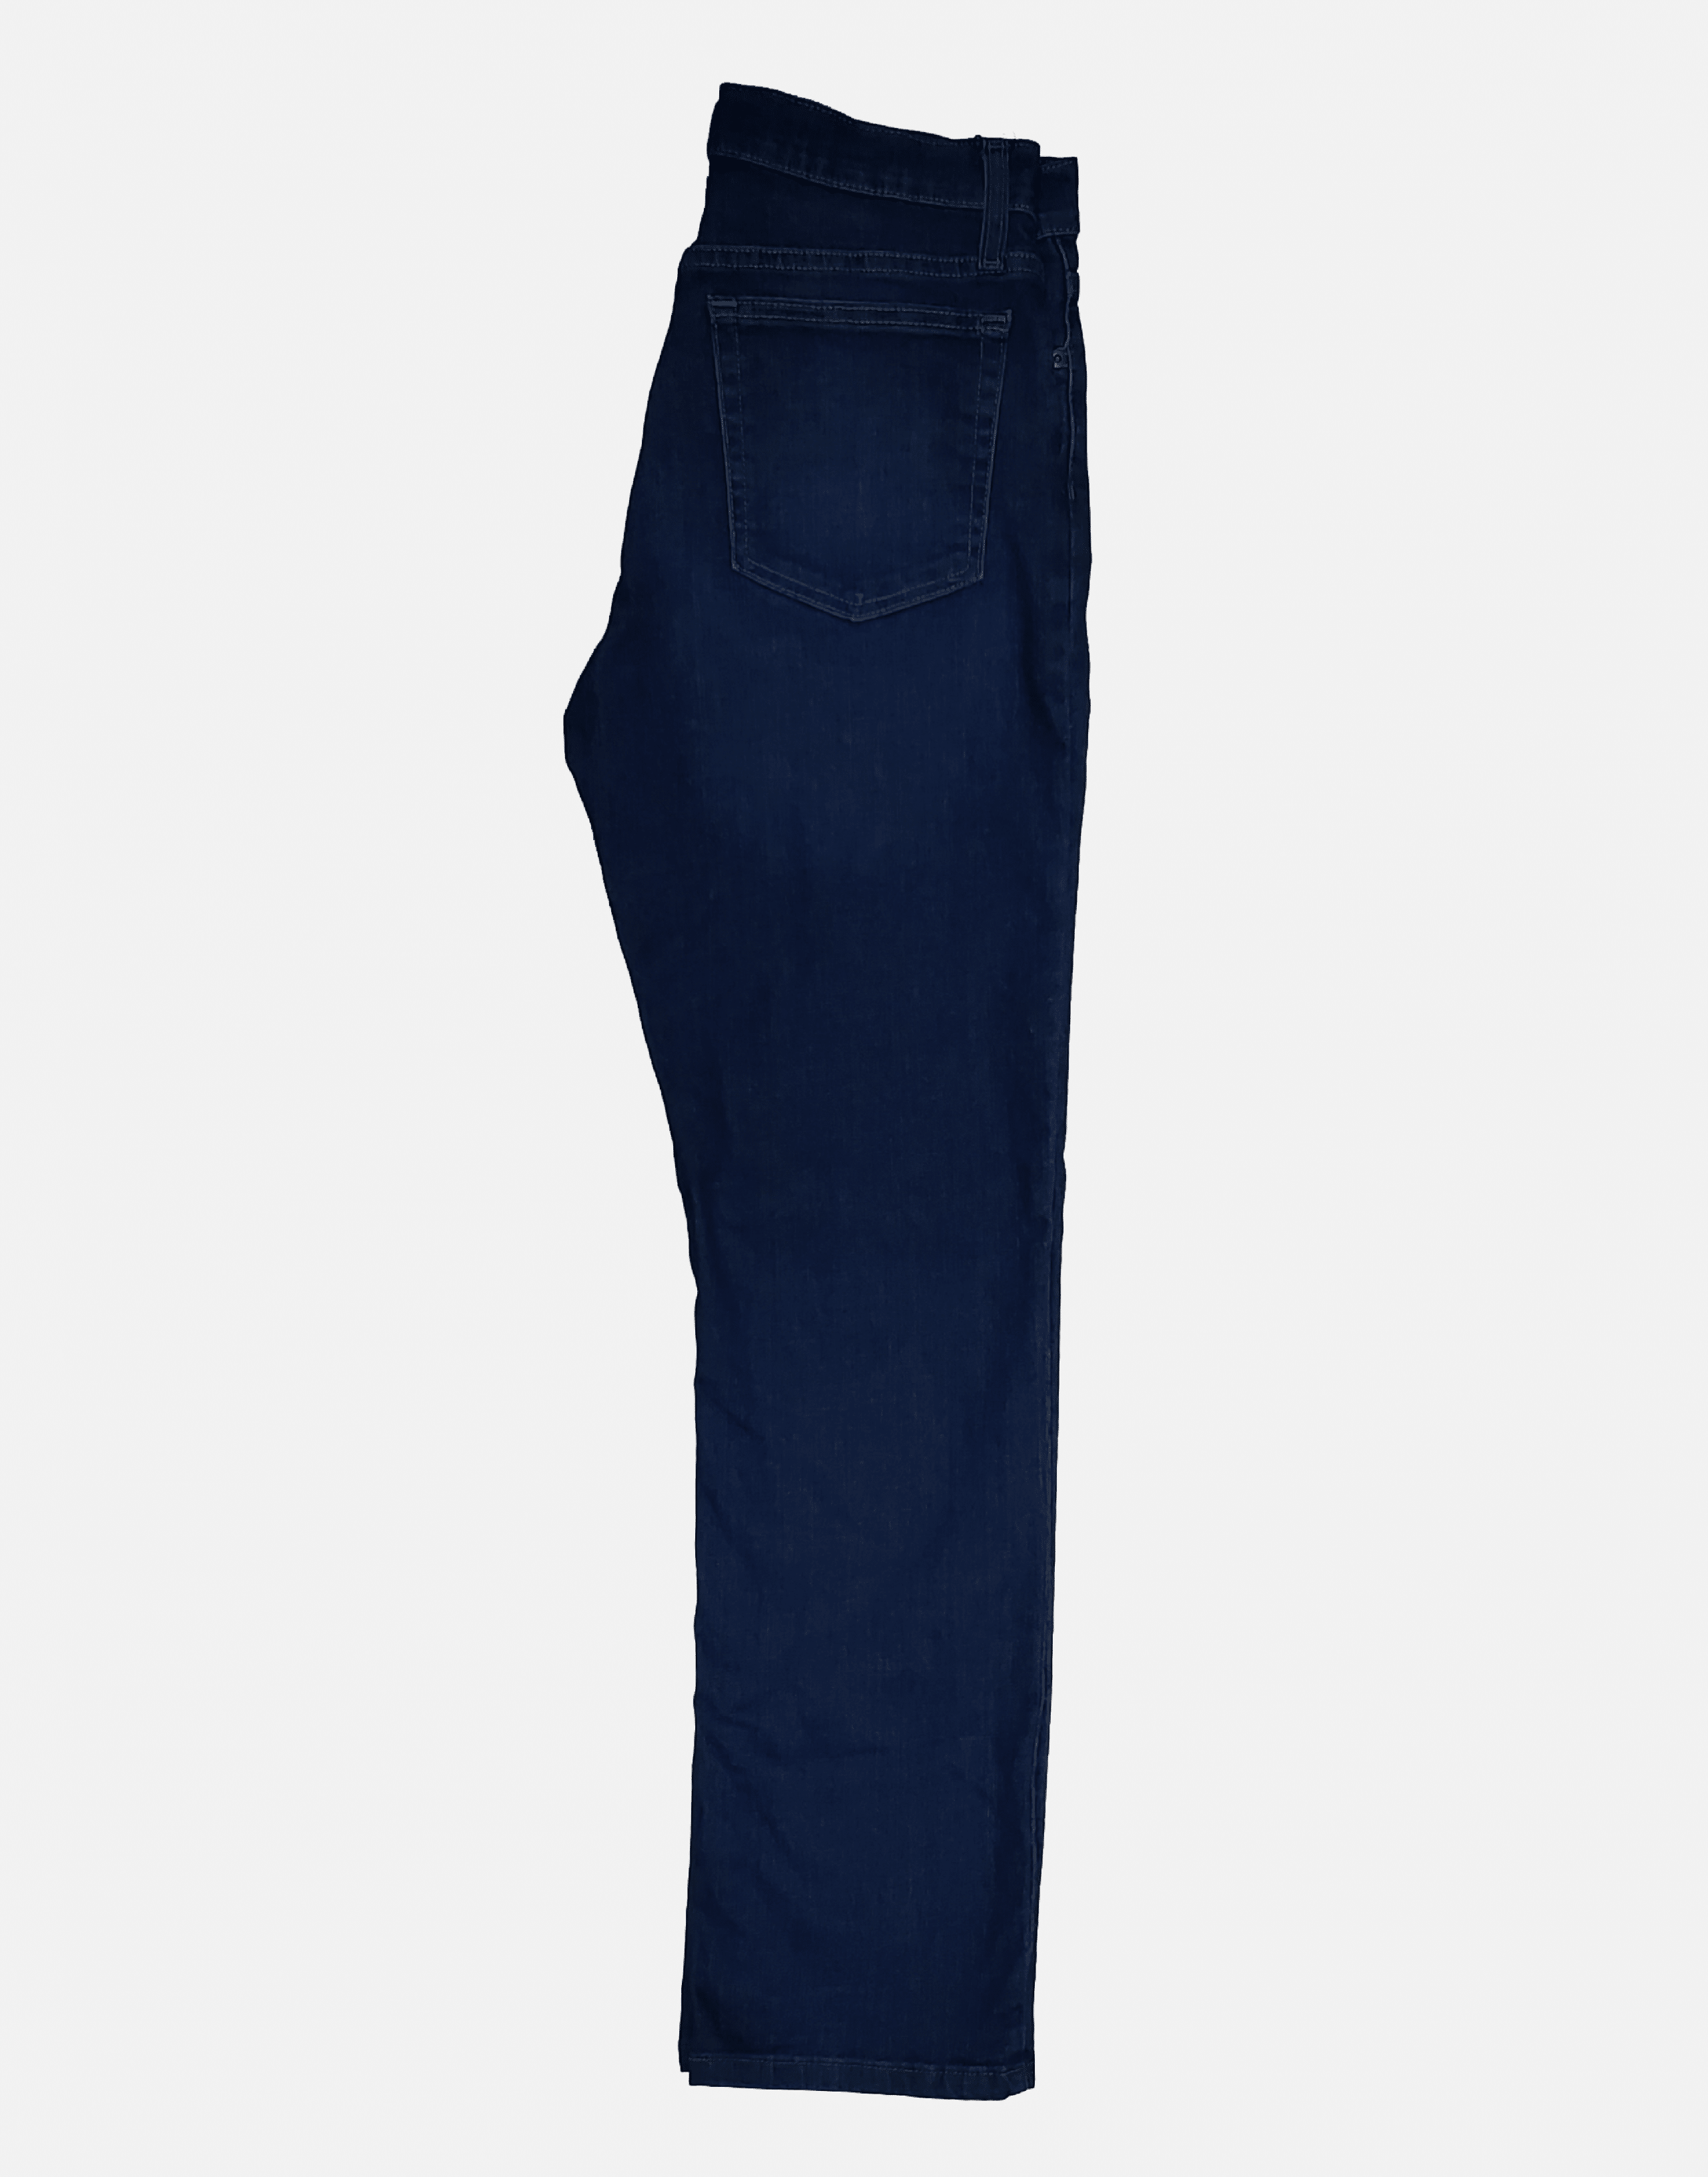 Swellone Movement - Stretch Jeans - Straight Leg (Dark Blue)